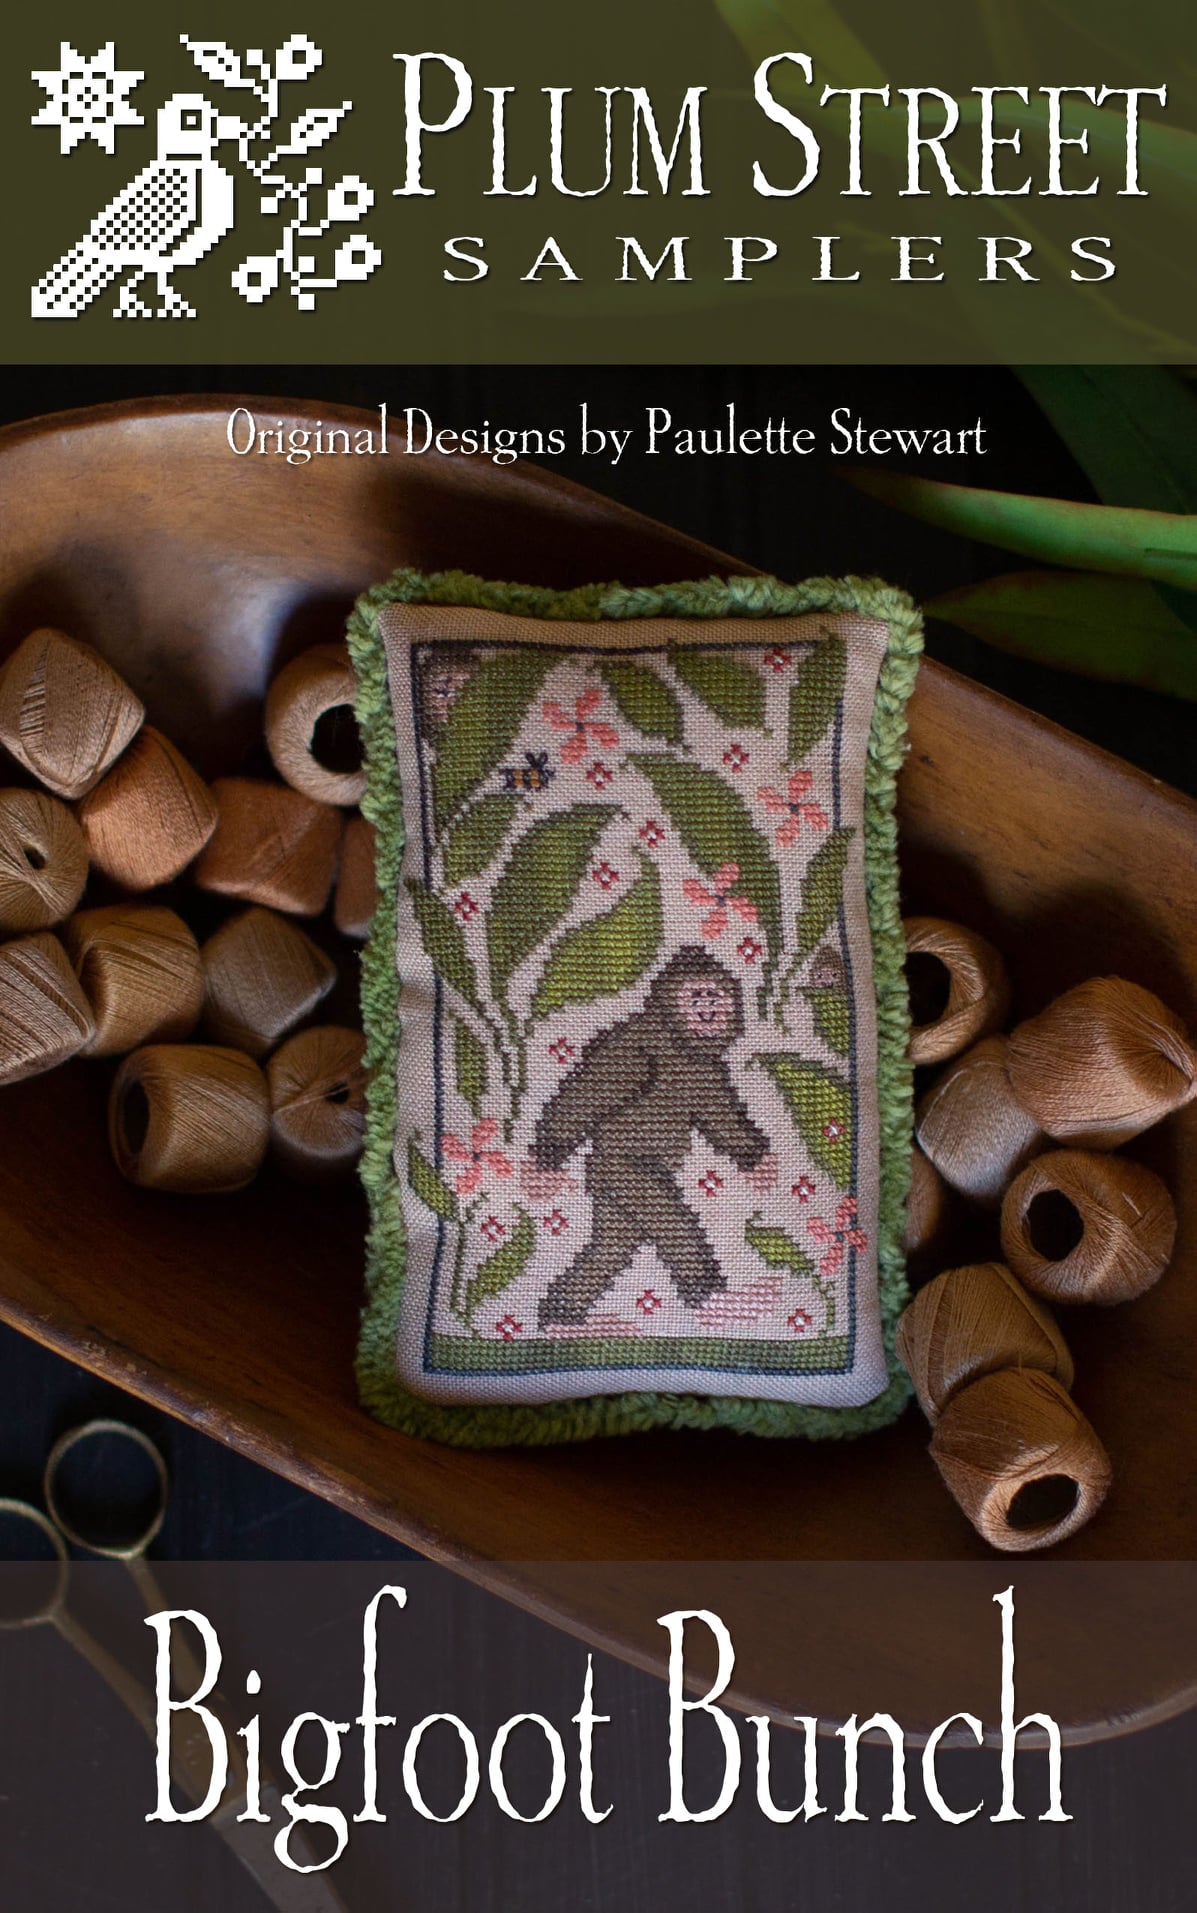 Bigfoot Bunch - Cross Stitch Pattern by Plum Street Samplers